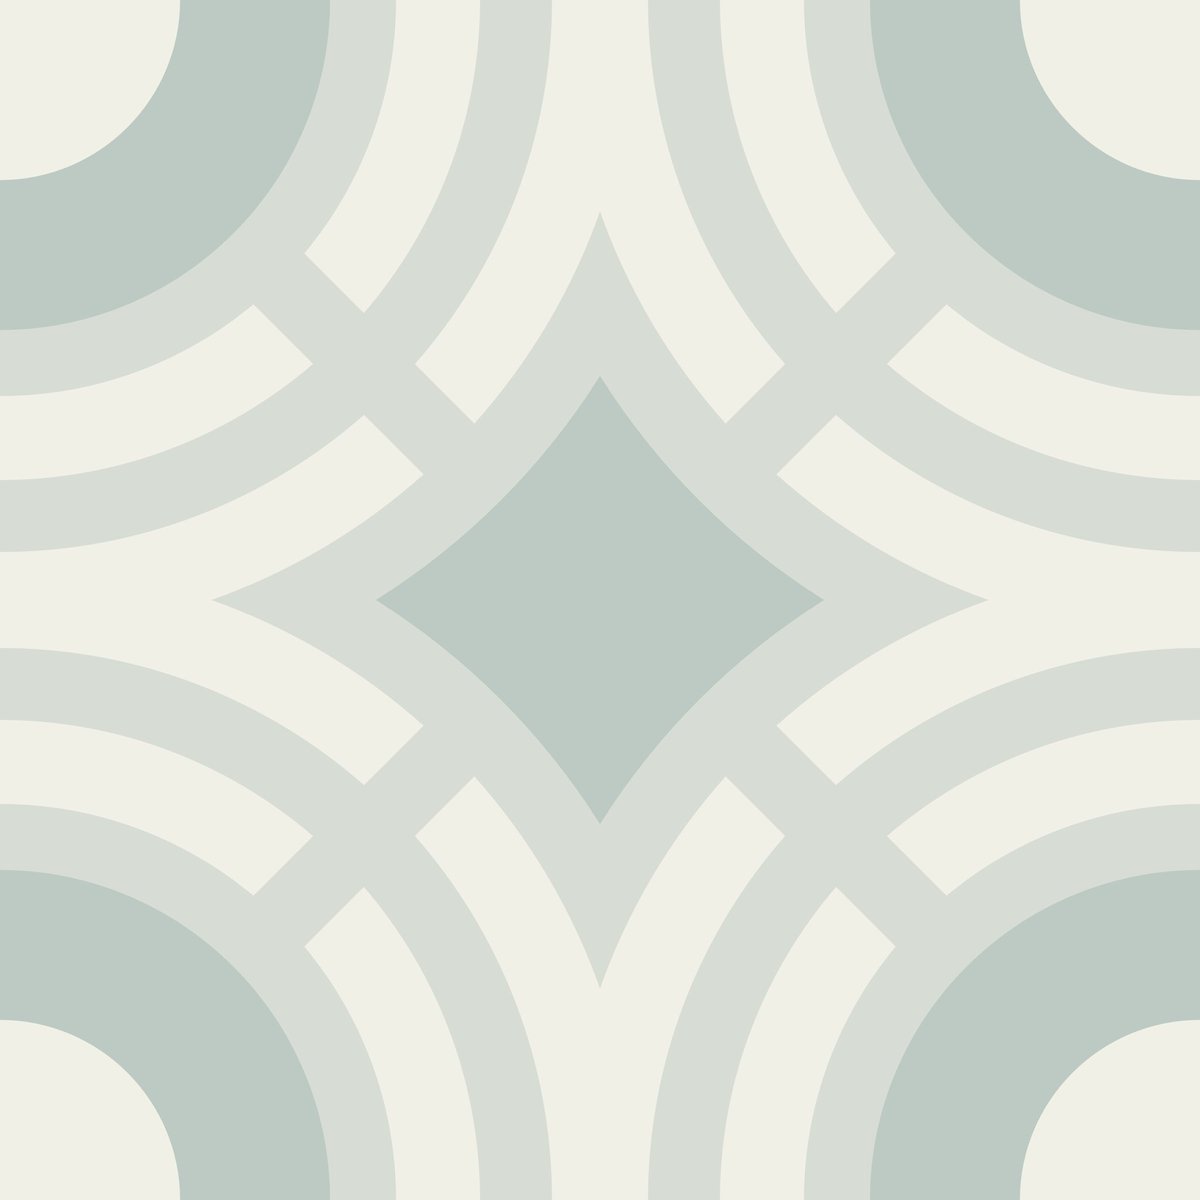 Geometric Pattern: Chapateo: Savon Light / #RedWolf redwolfoz.redbubble.com/works/158323843 via @redbubble spoonflower.com/designs/161733… via @spoonflower #art #geometricpattern #geometry #spanish #retro #tile #diamond #circle #antique